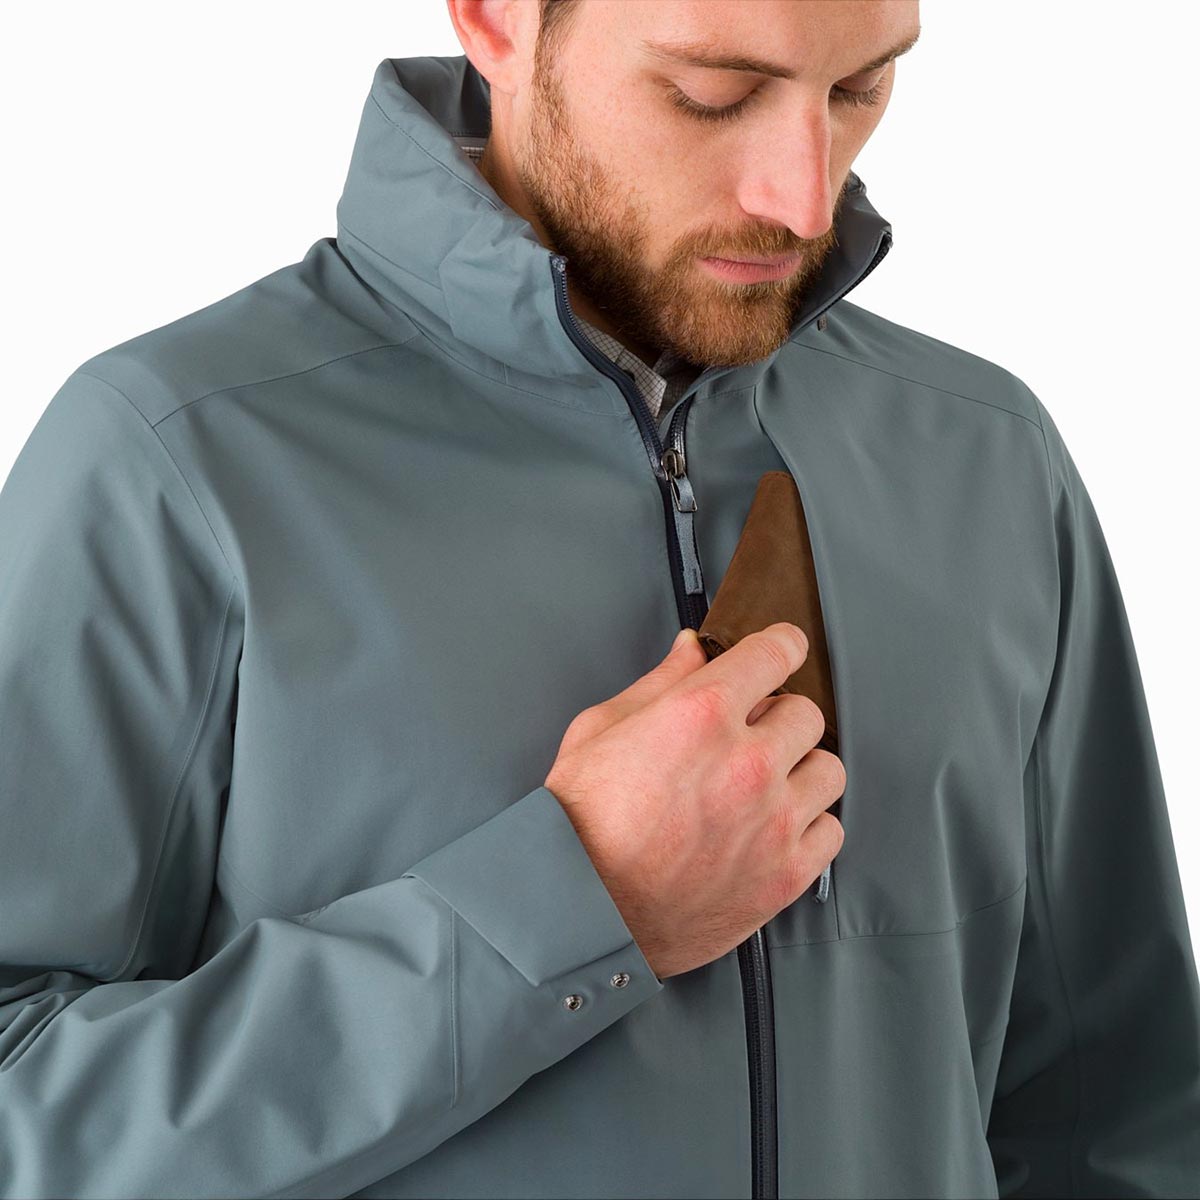 Arc'teryx Interstate Jacket, men's, discontinued Spring 2019 model 